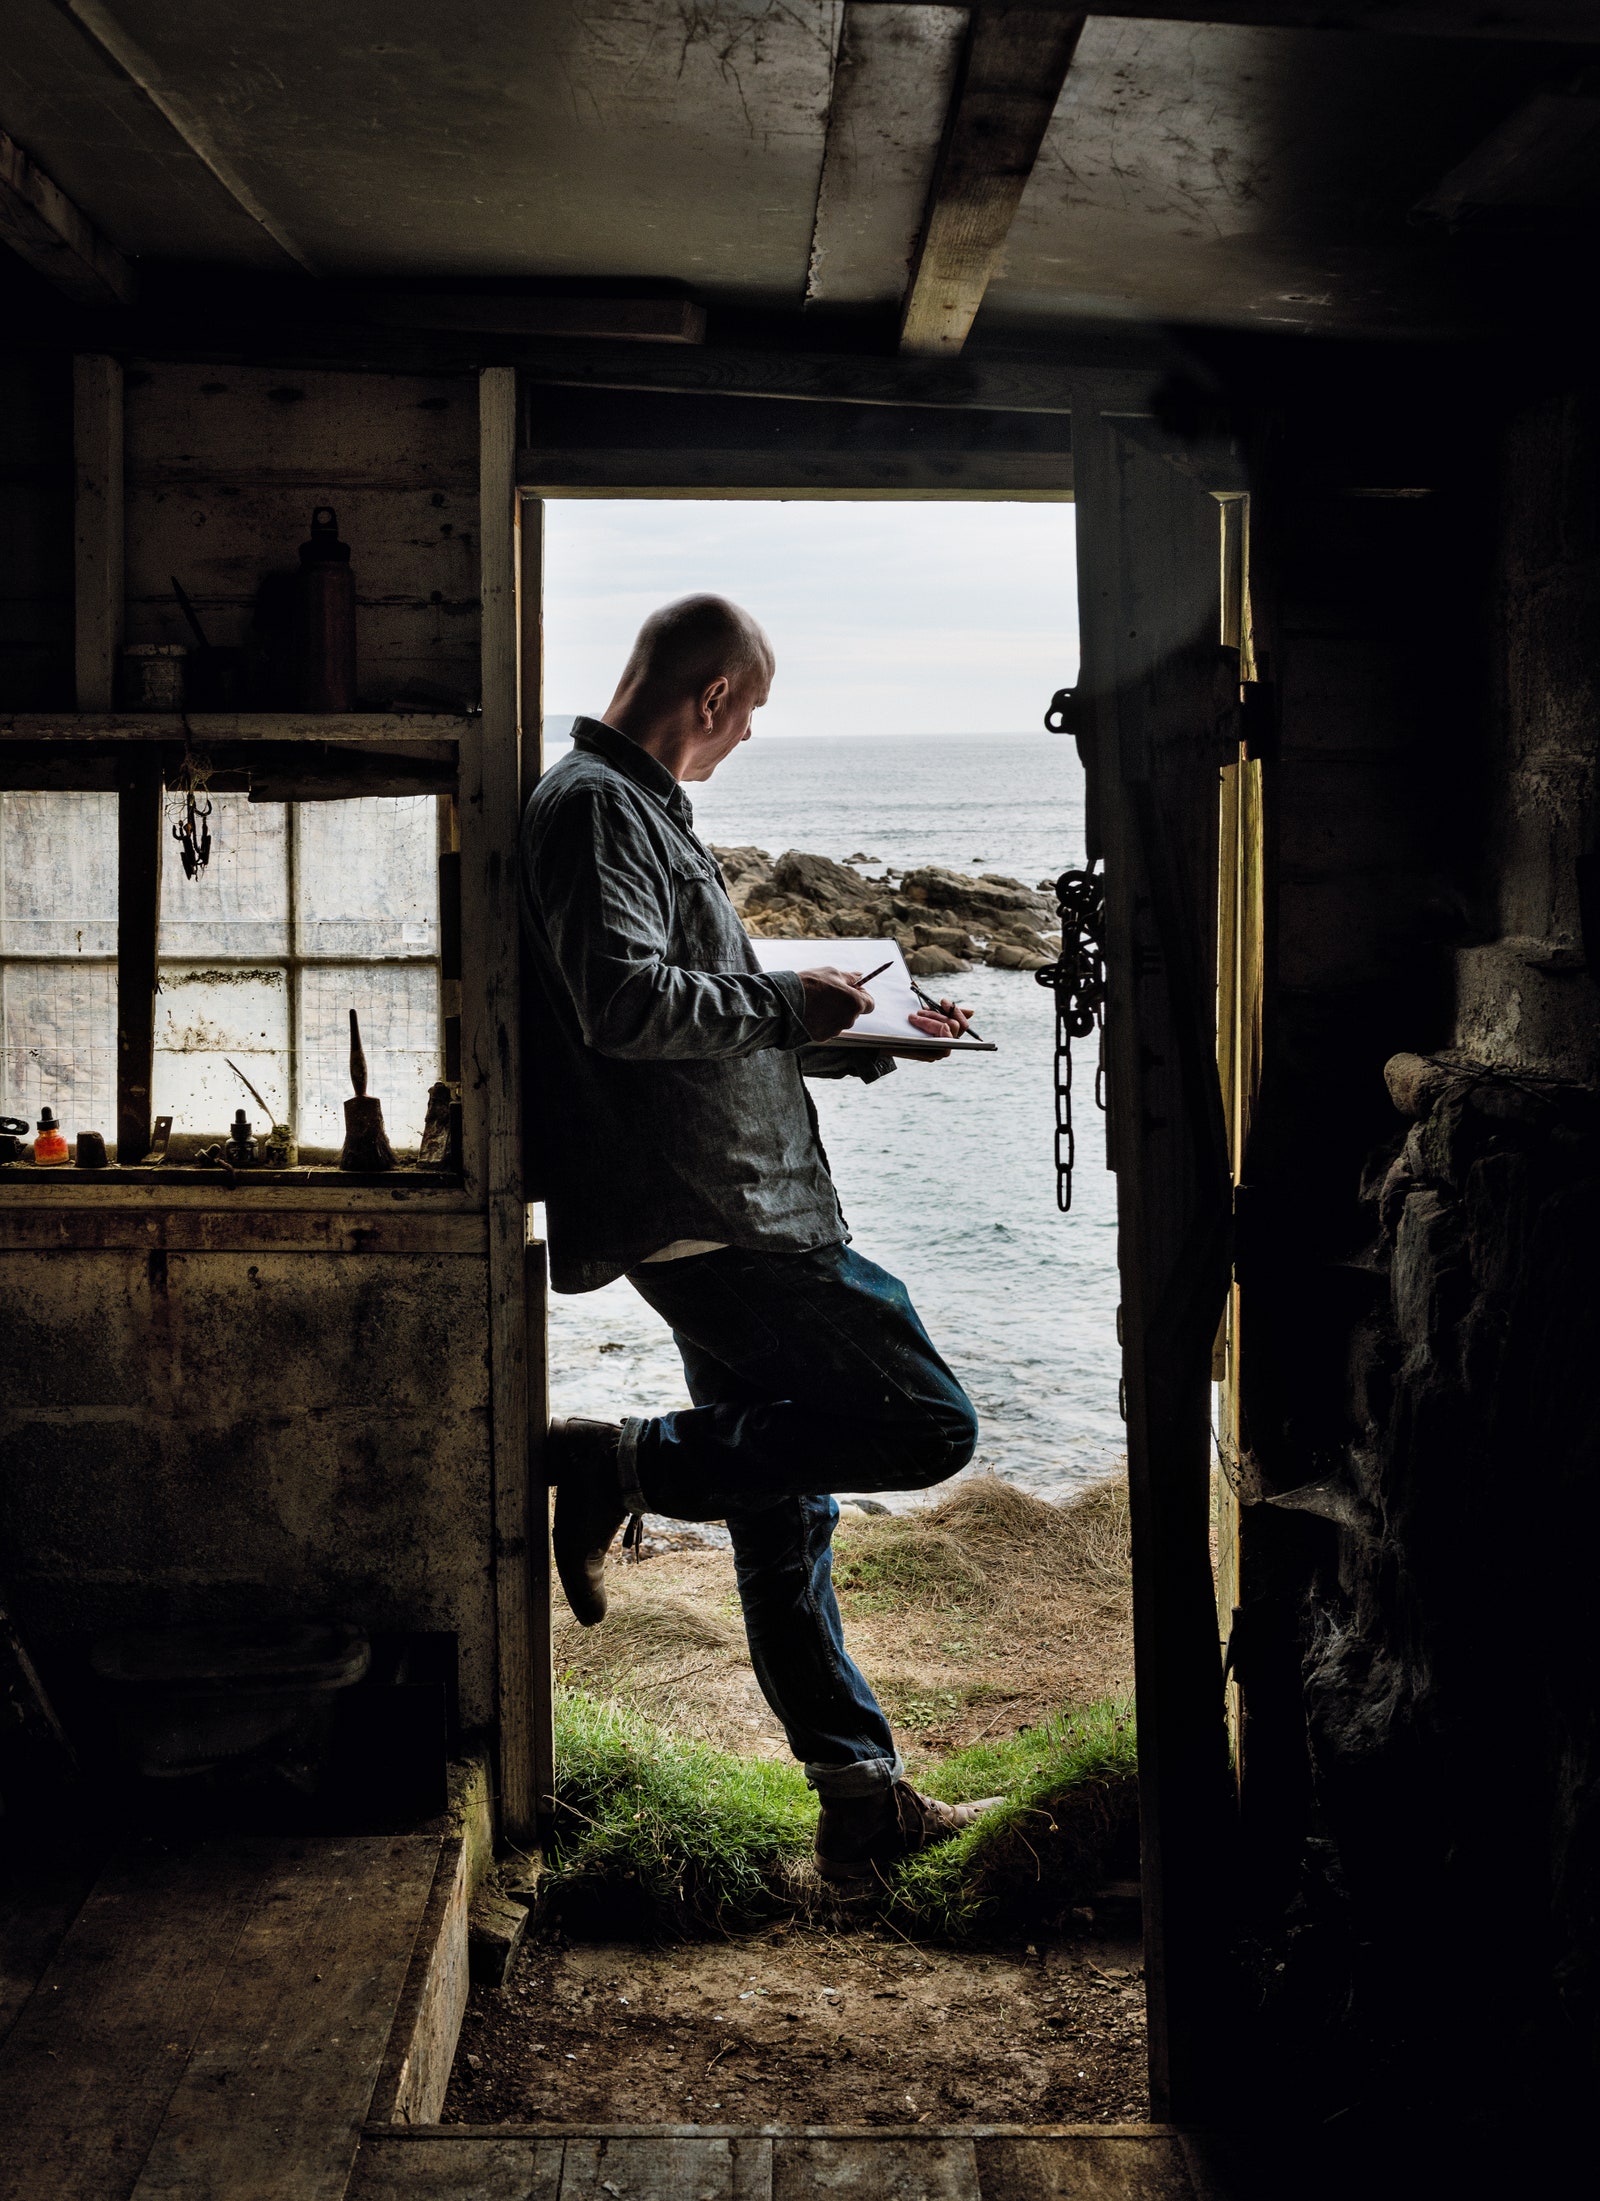 Sketching the sea from the doorway of his clifftop studio